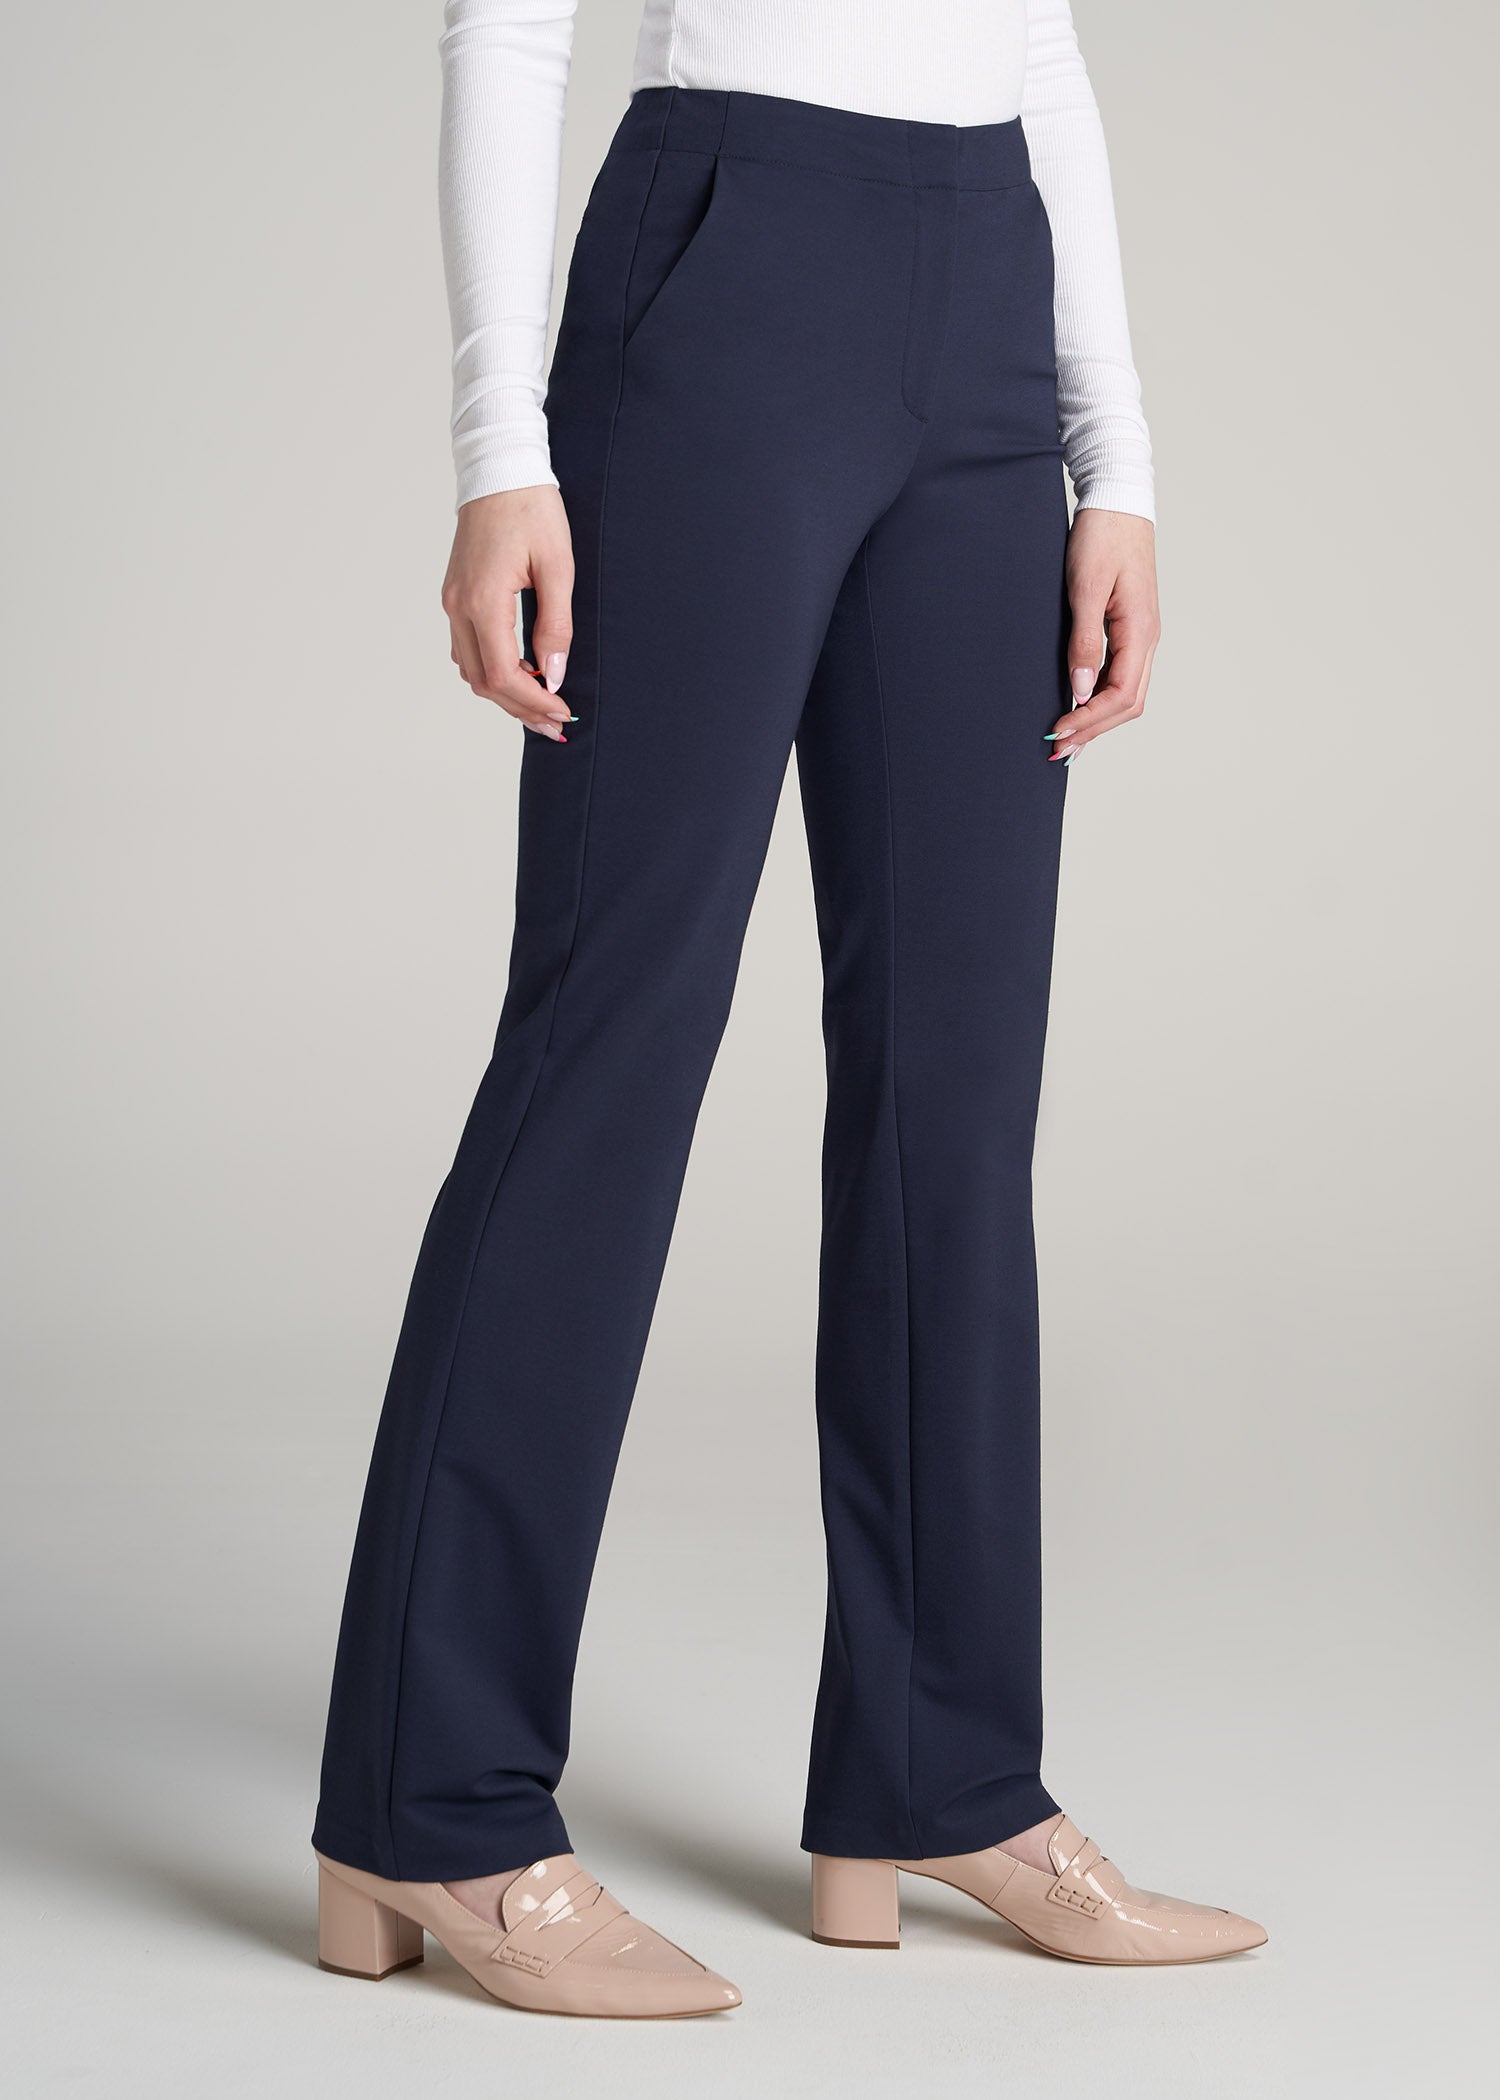 Navy Blue Fashion Striped Women Casual Dress Suit Pants Trousers  China Dress  Pants and Fashion Pants price  MadeinChinacom